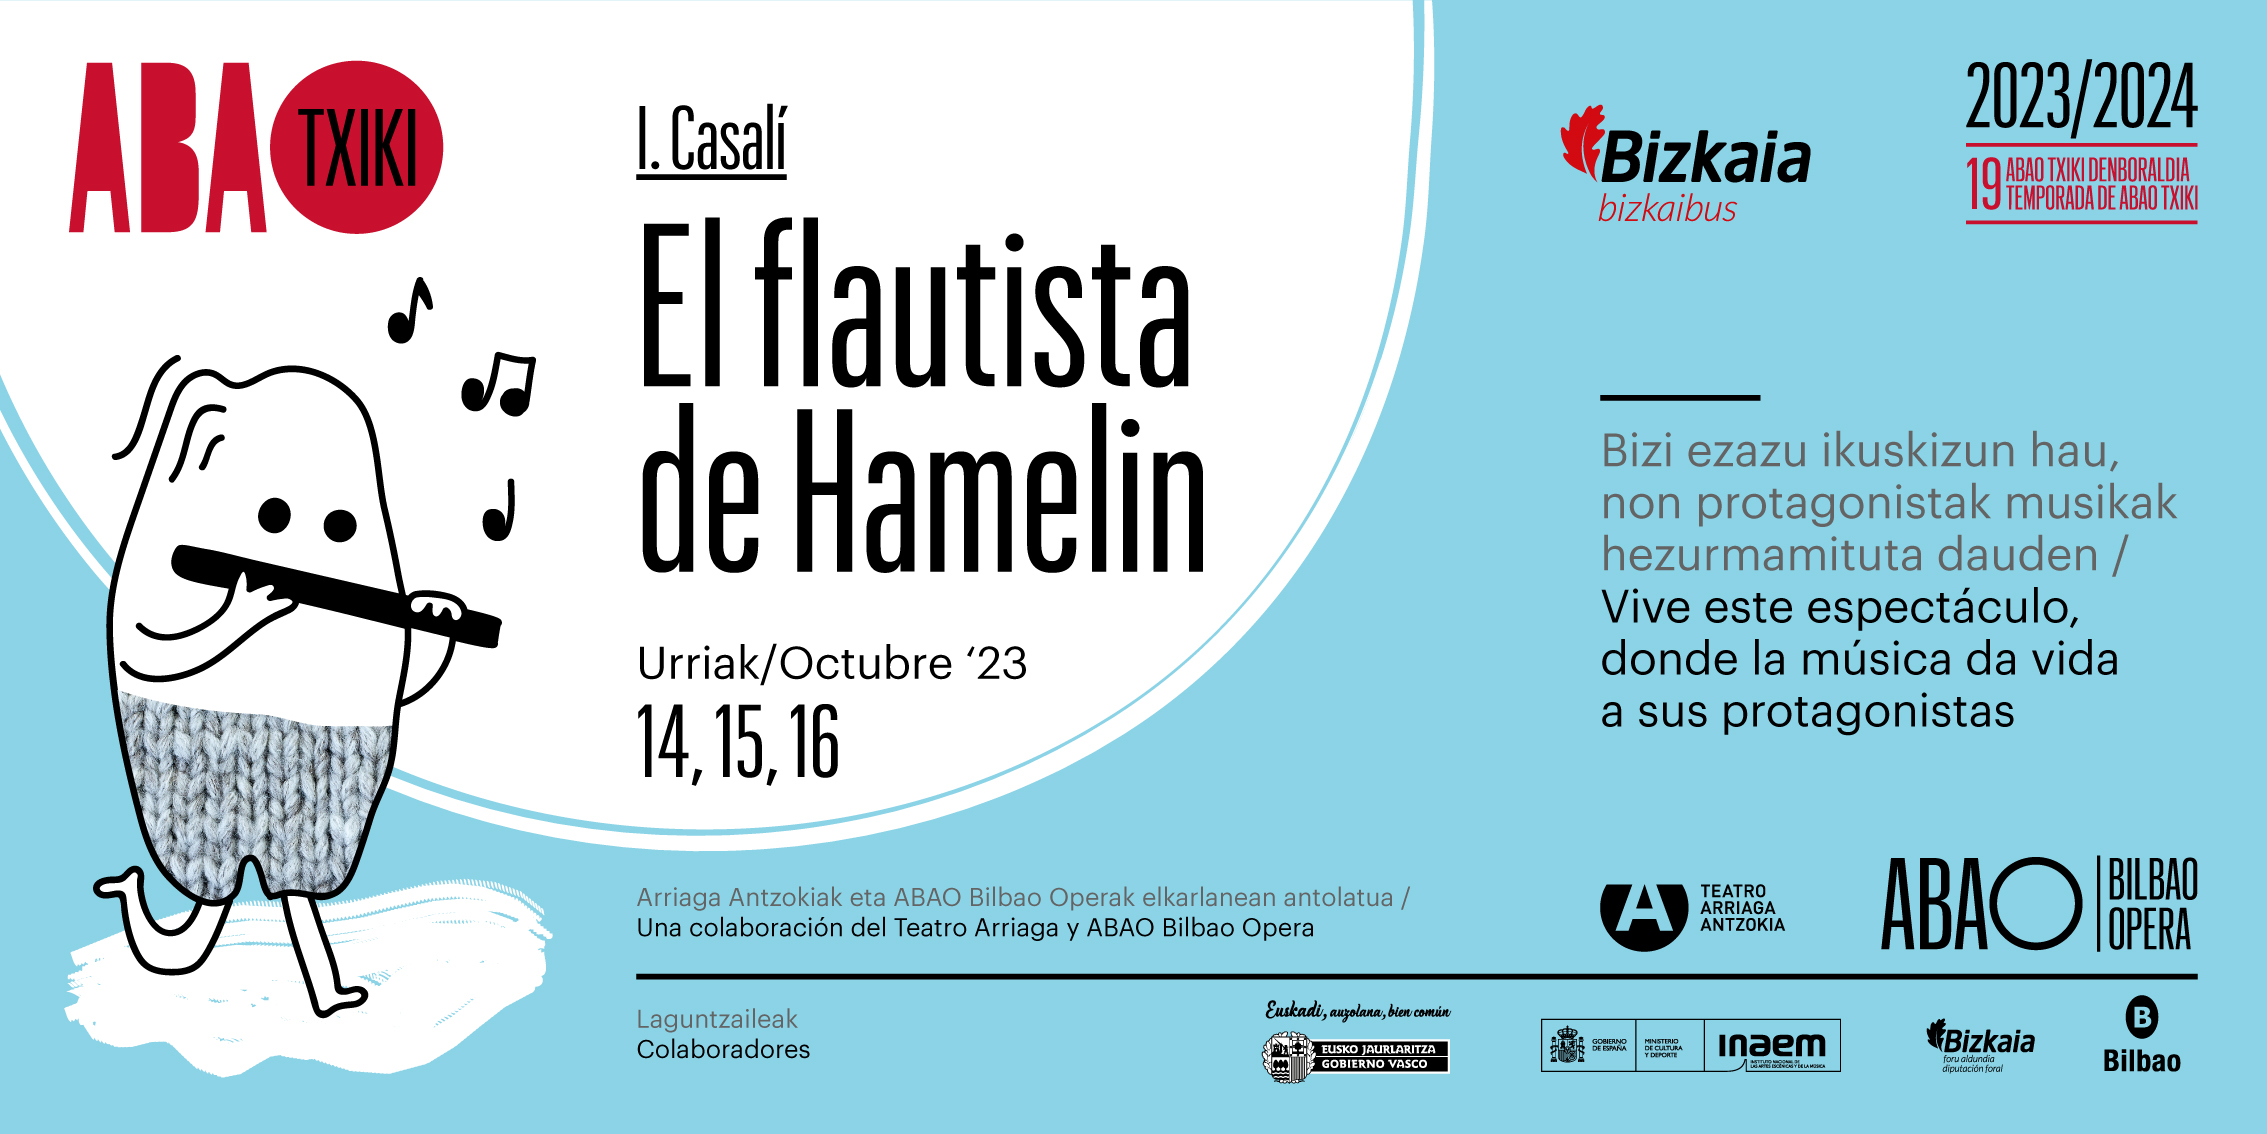 Cartel promocional de "El flautista de Hamelin" 